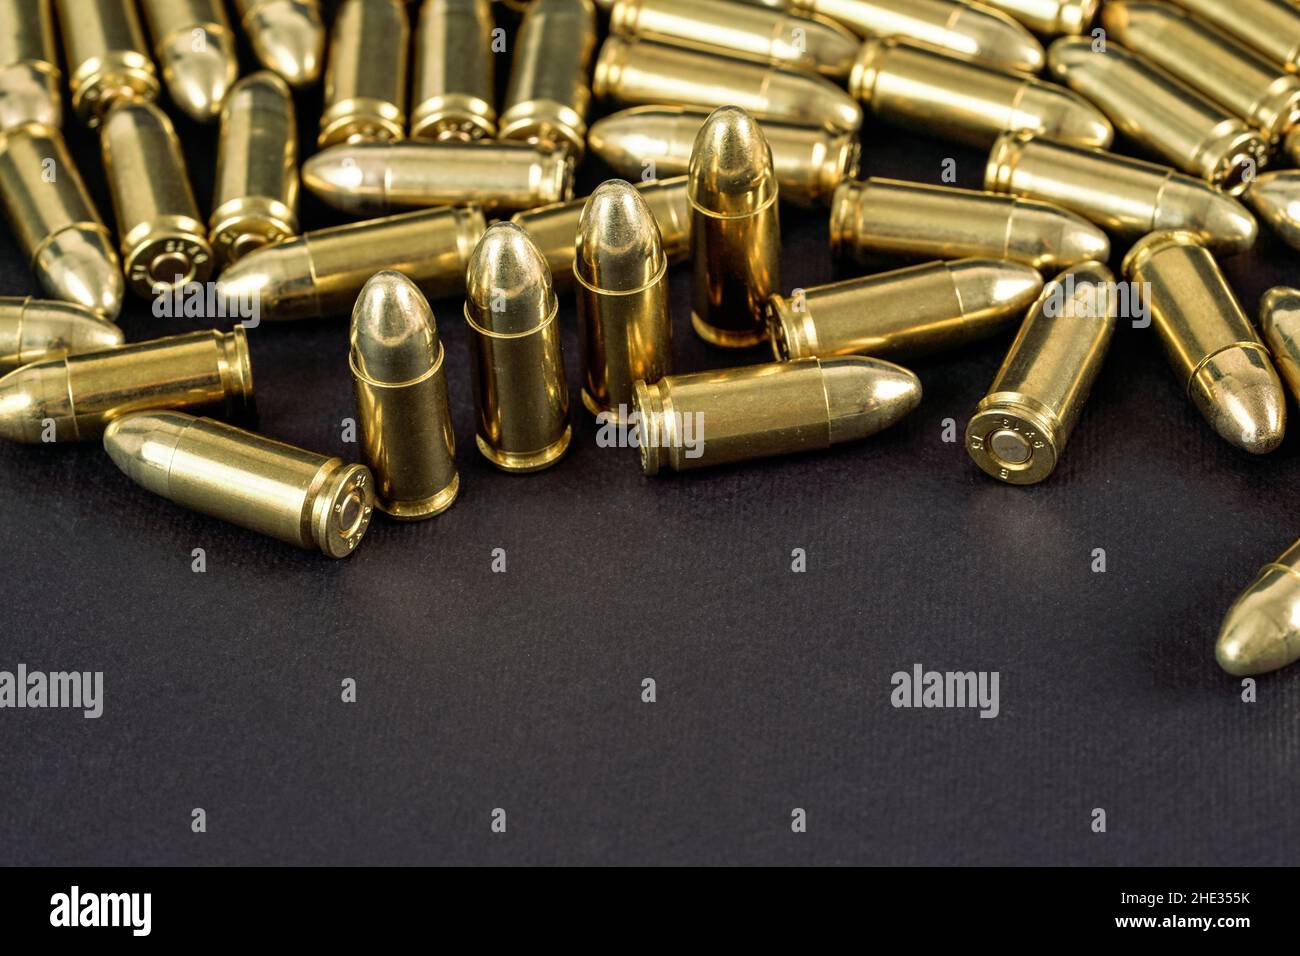 https://c8.alamy.com/comp/2HE355K/many-brass-gun-bullets-on-black-table-closeup-view-space-for-text-bottom-part-2HE355K.jpg